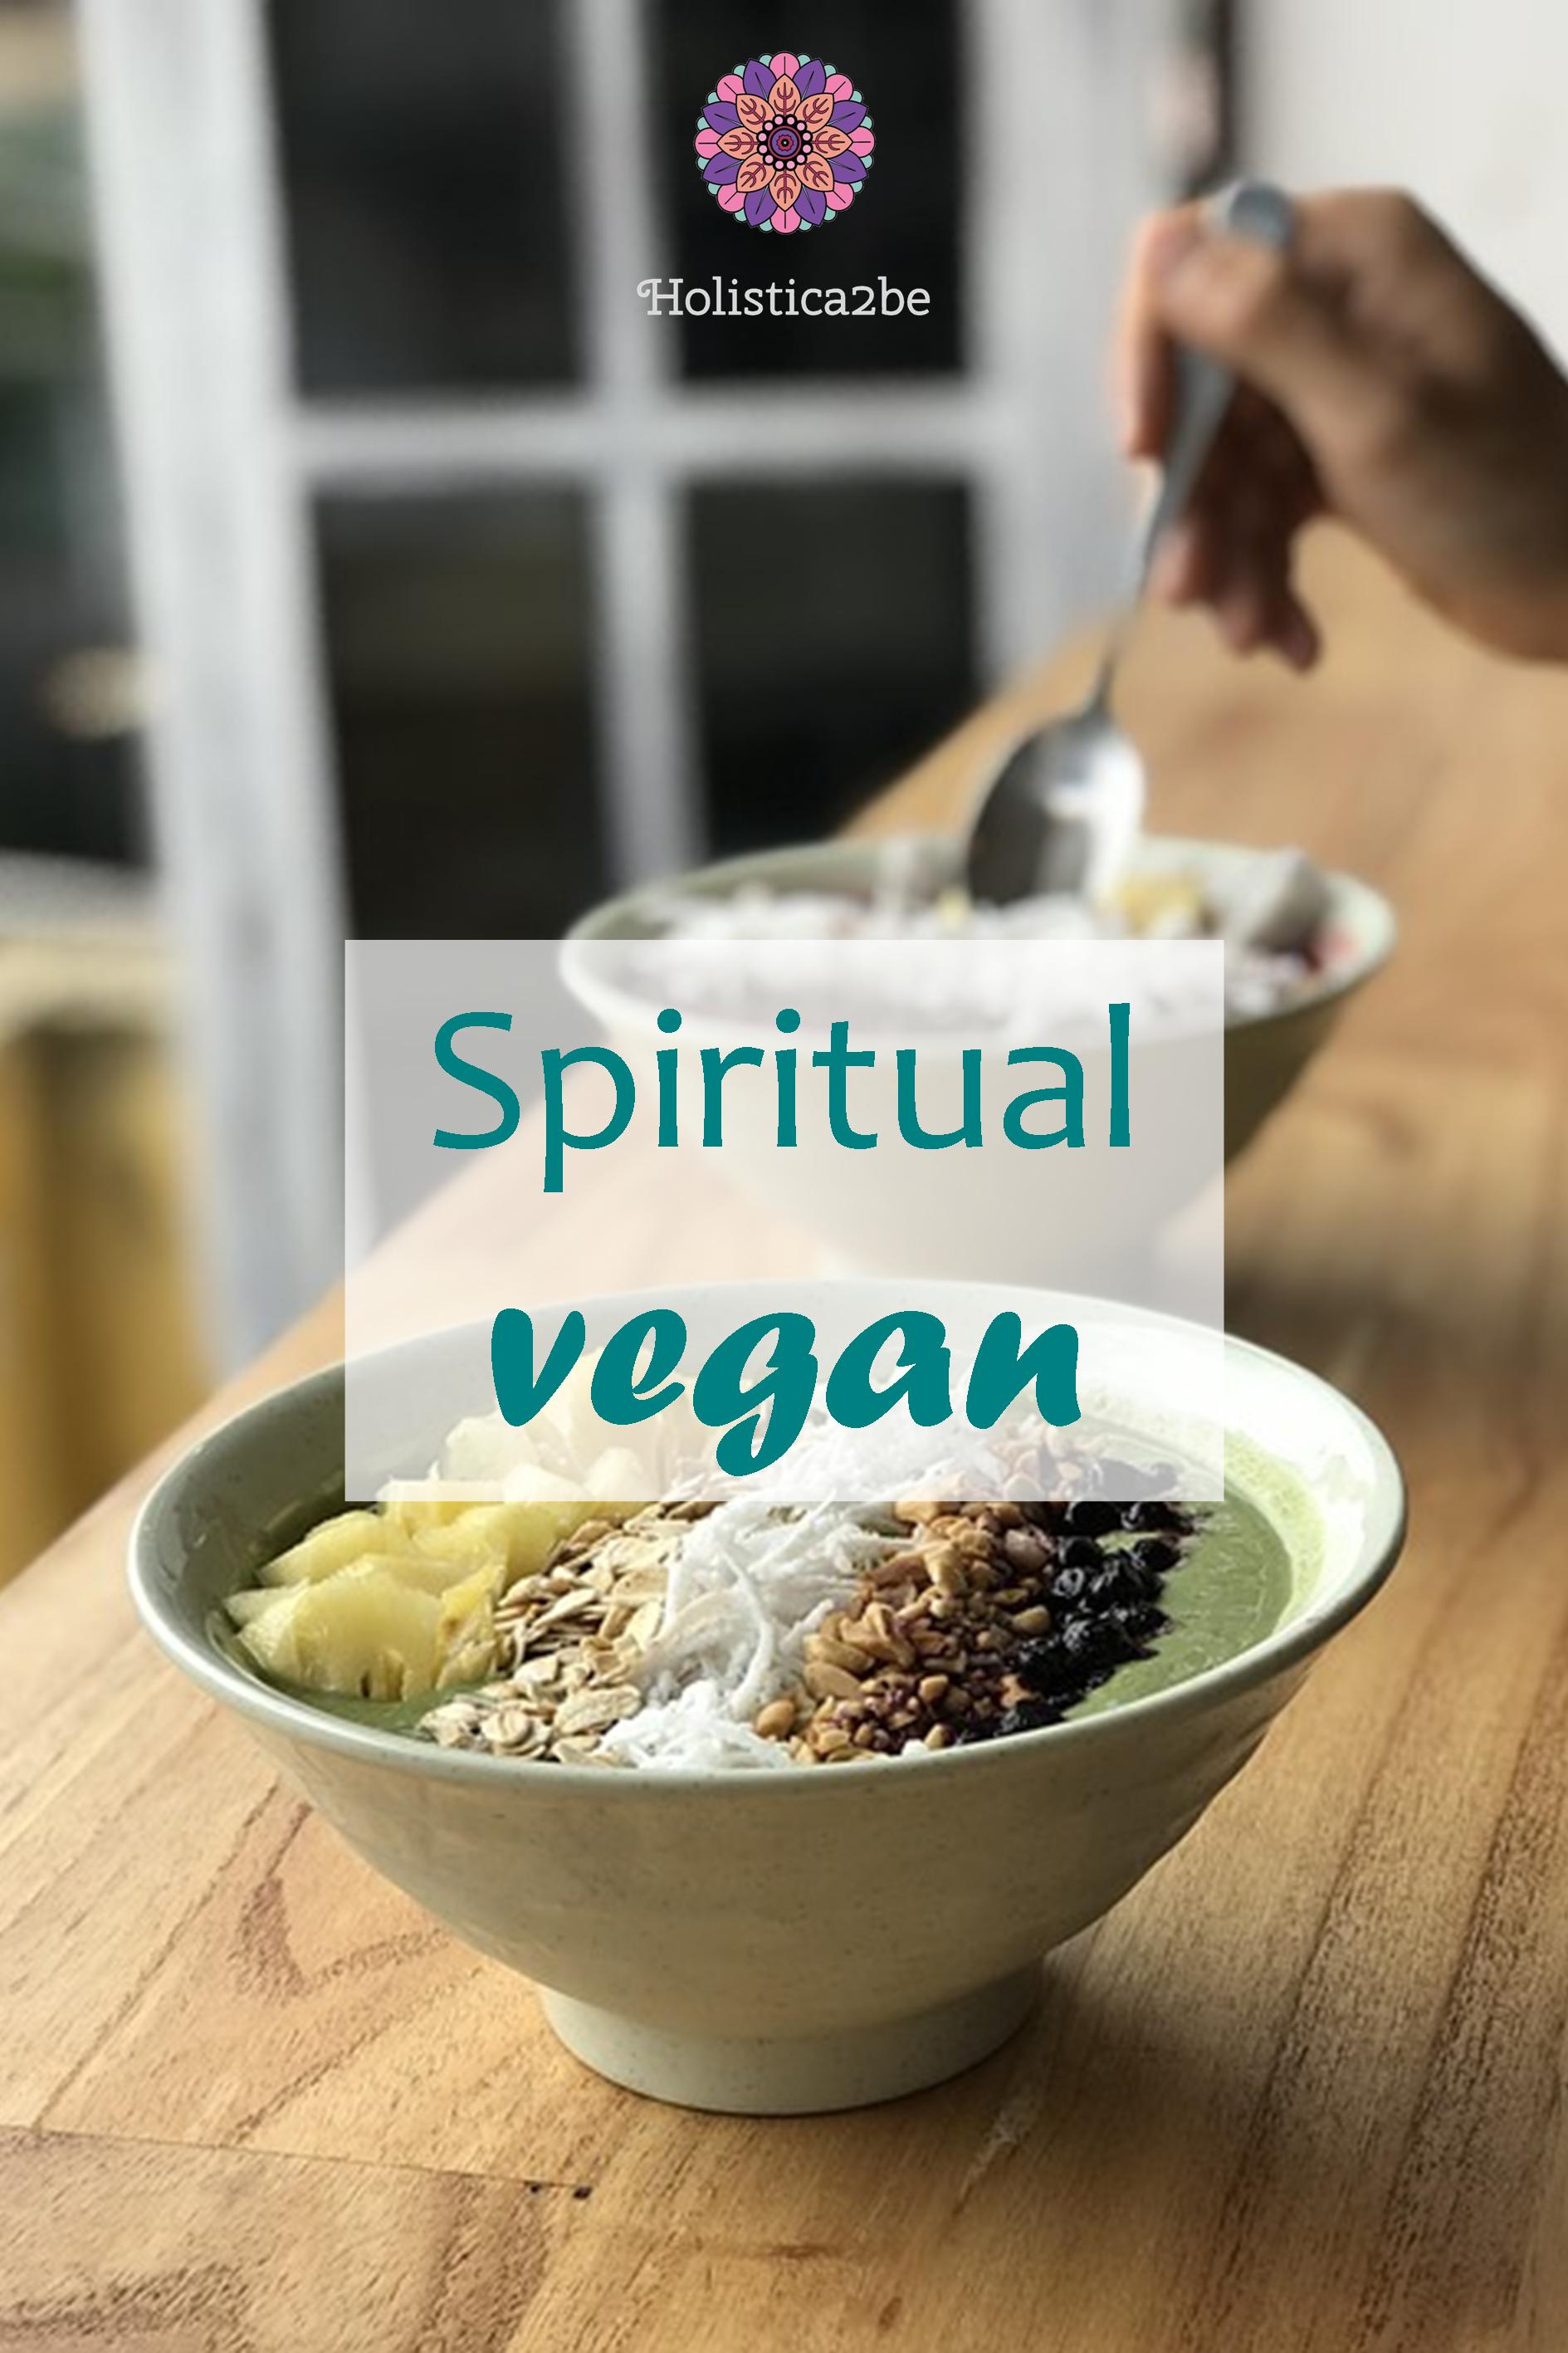 Spiritual vegan